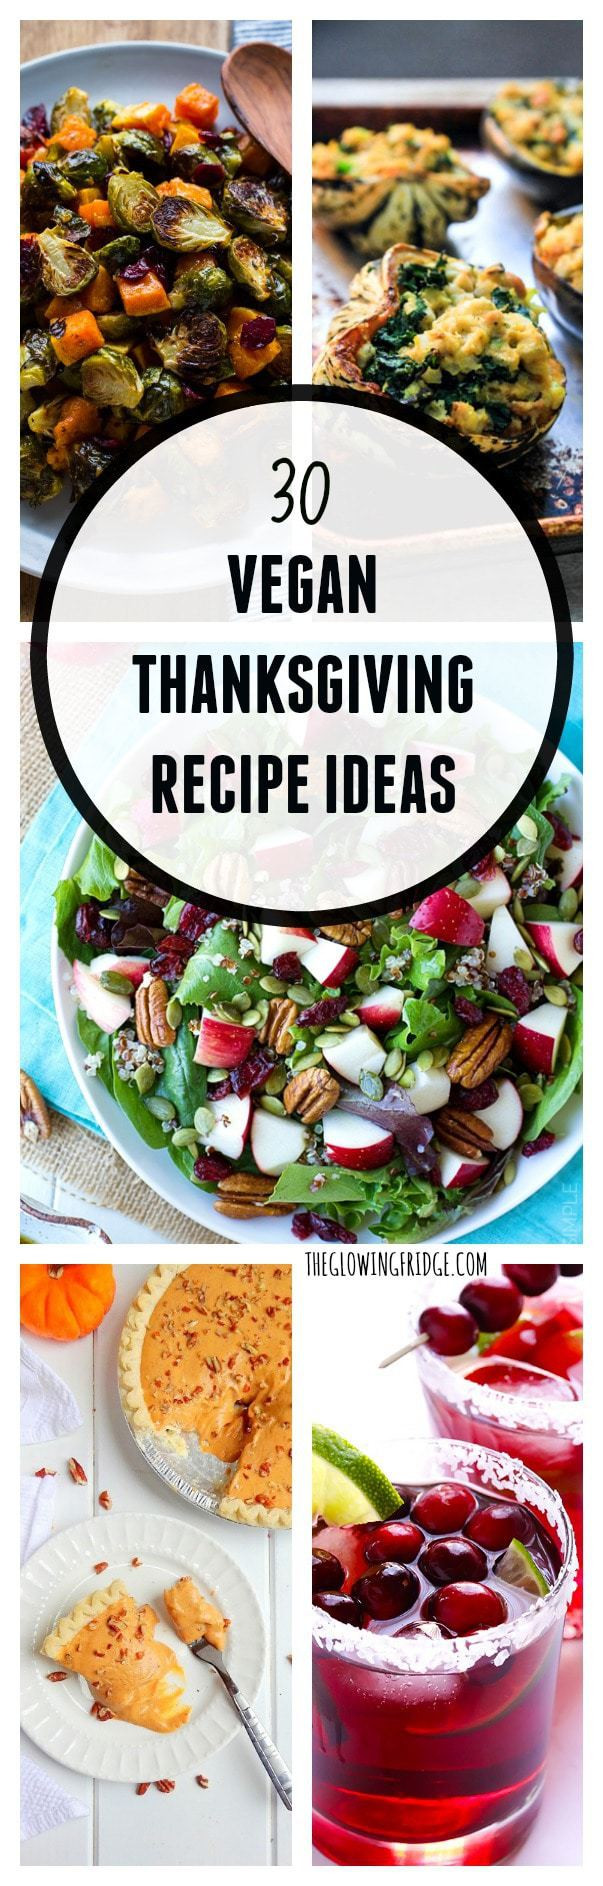 Vegan Thanksgiving Recipe
 30 Vegan Thanksgiving Recipe Ideas The Glowing Fridge